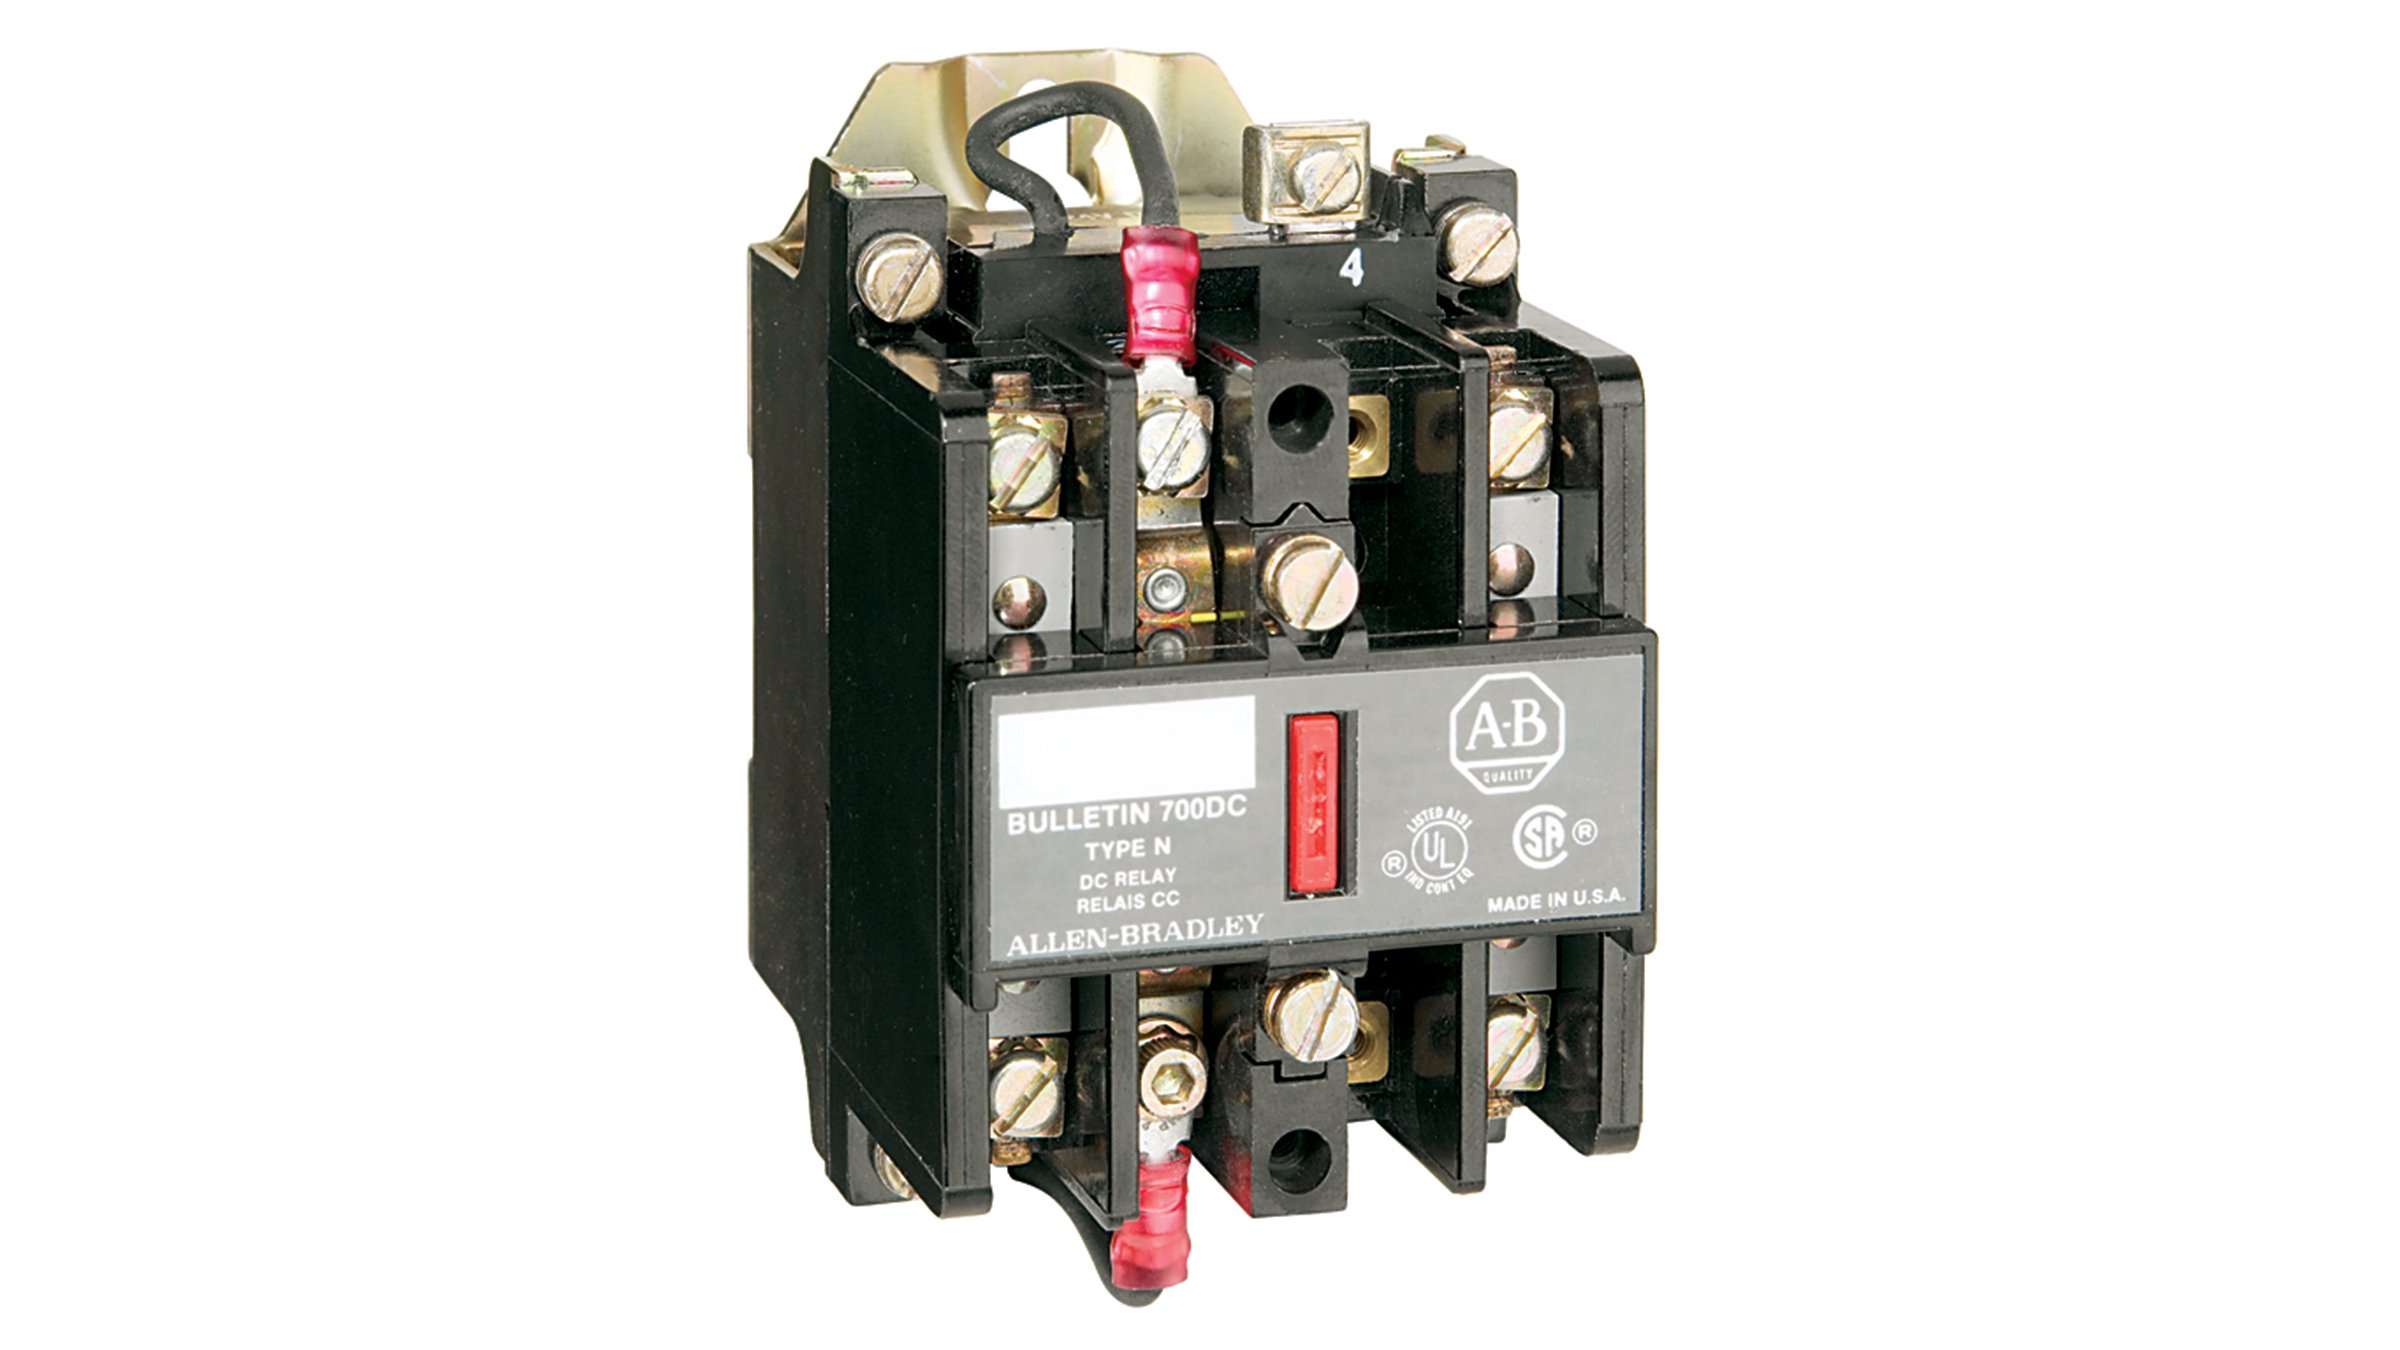 Allen-Bradley Bulletin 700-N 工业继电器是低特性高可靠性开关解决方案。